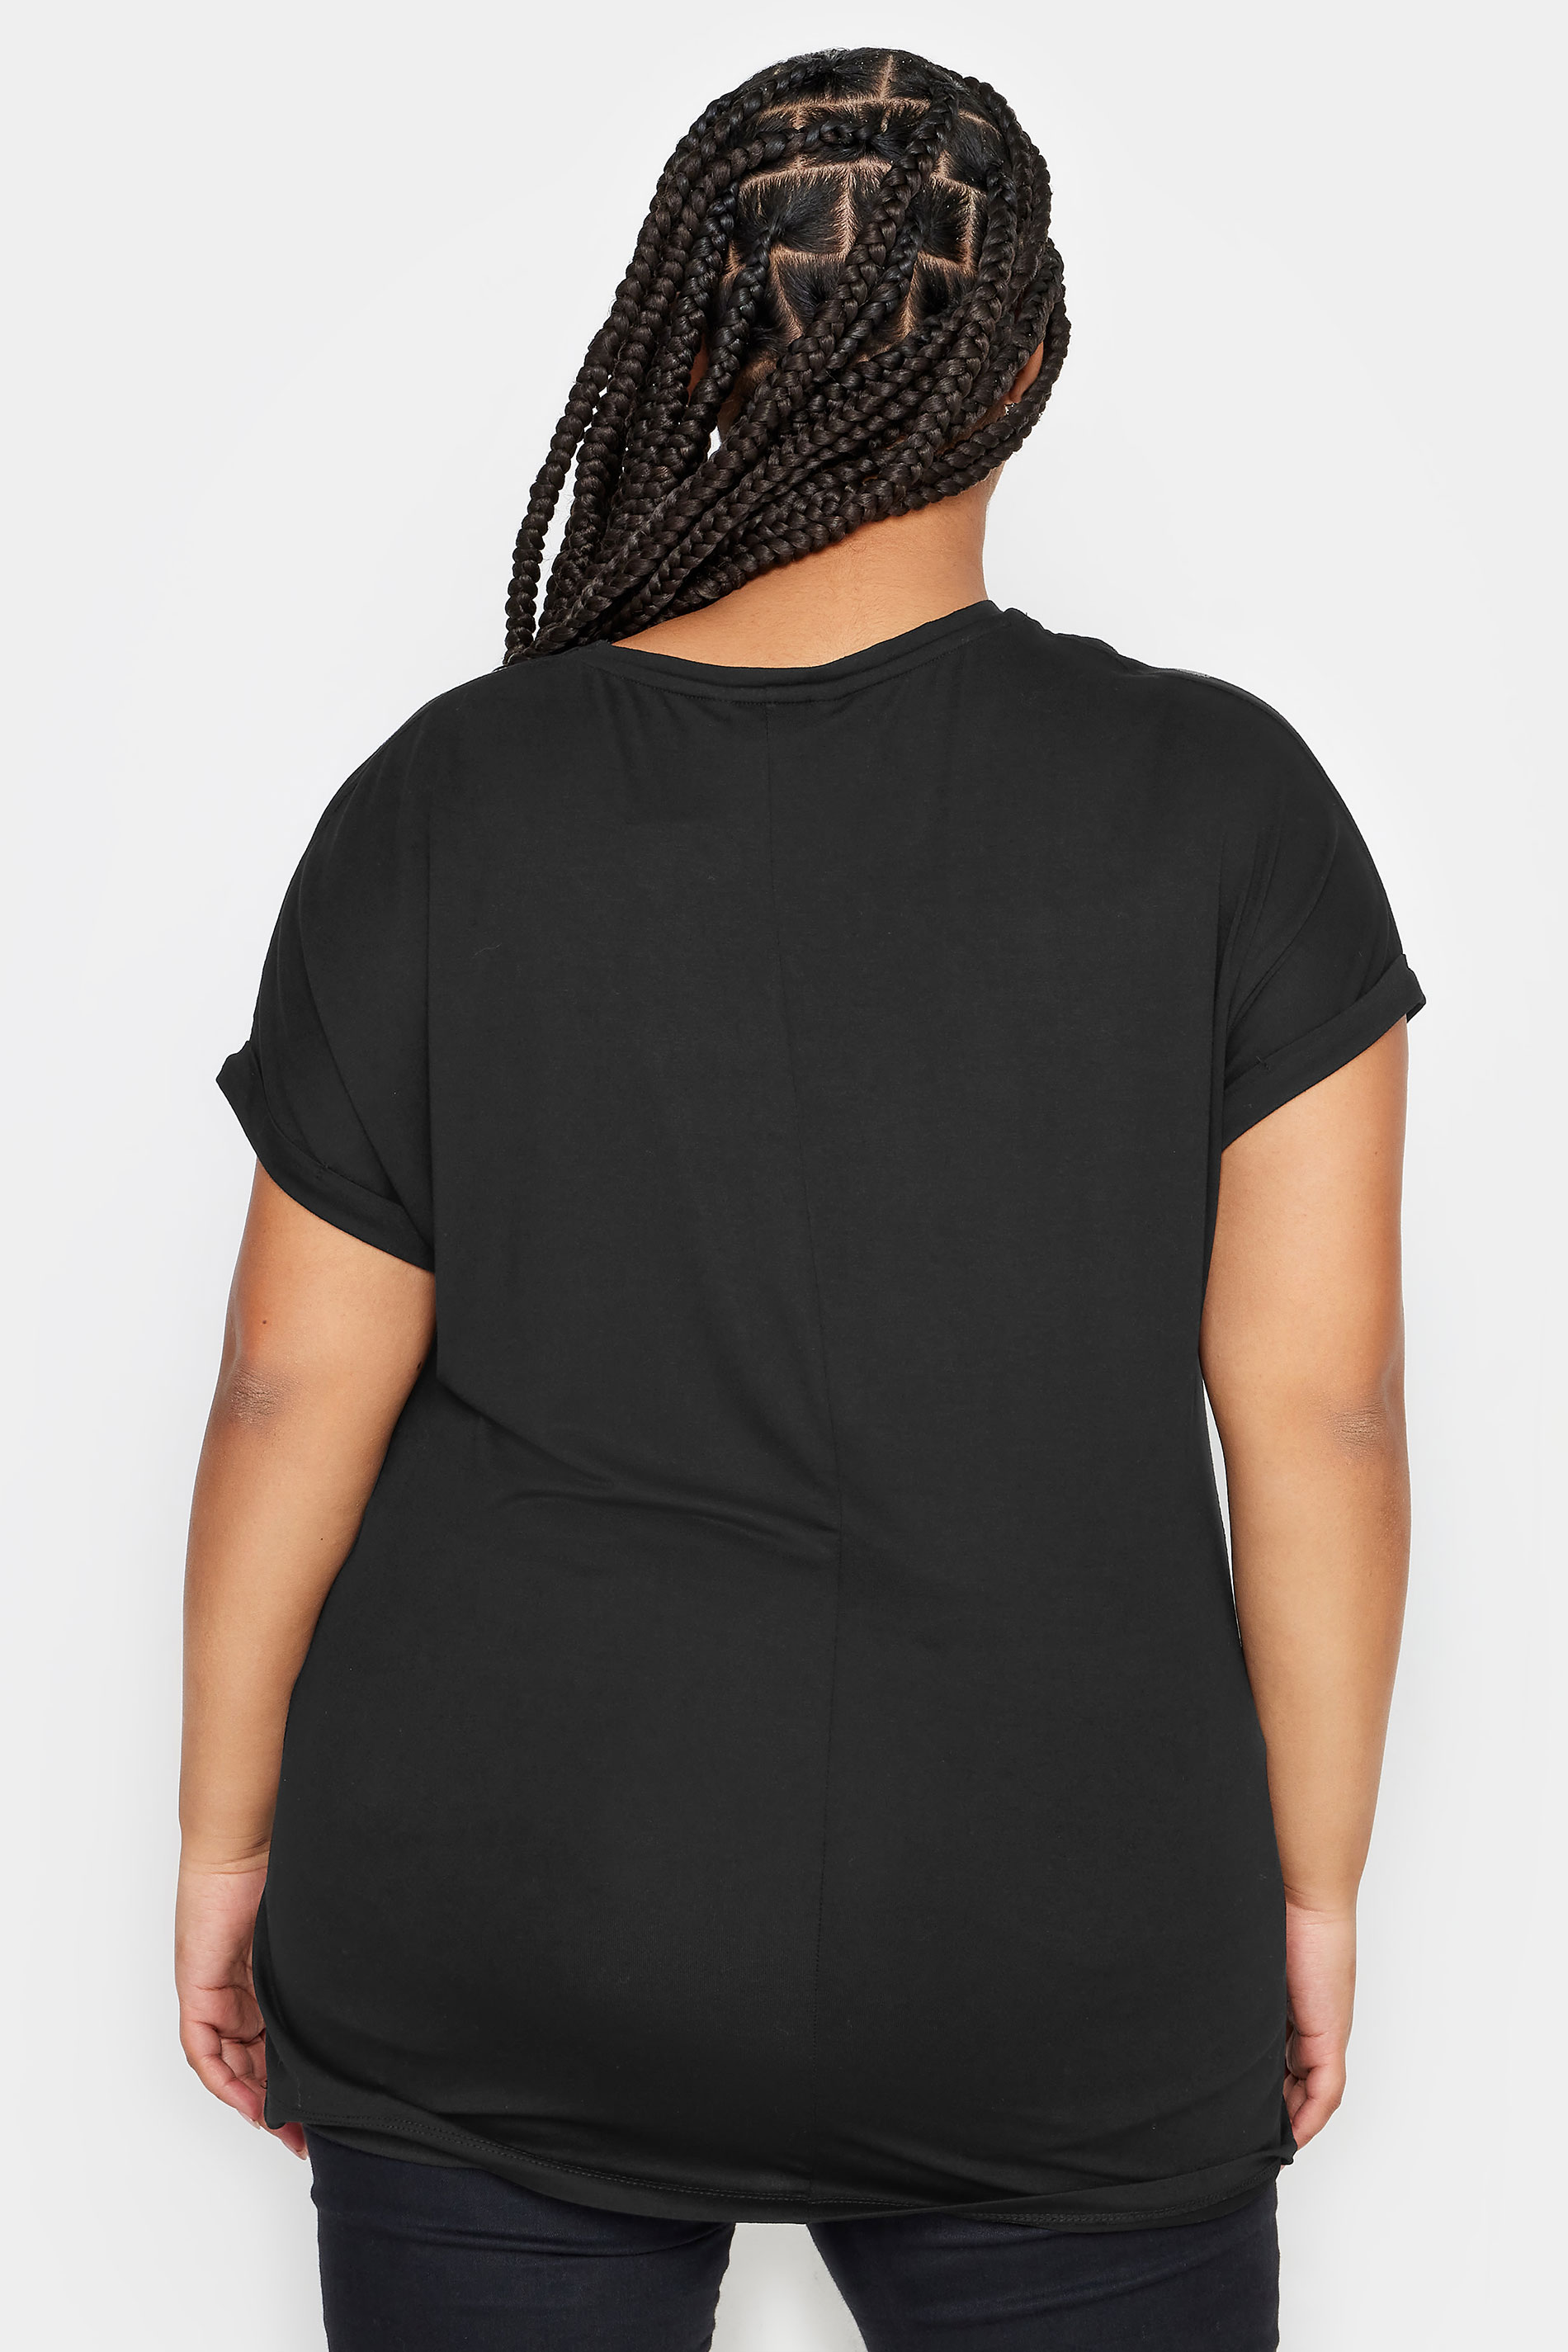 YOURS Plus Size Black Leopard Print Stud T-Shirt | Yours Clothing 3